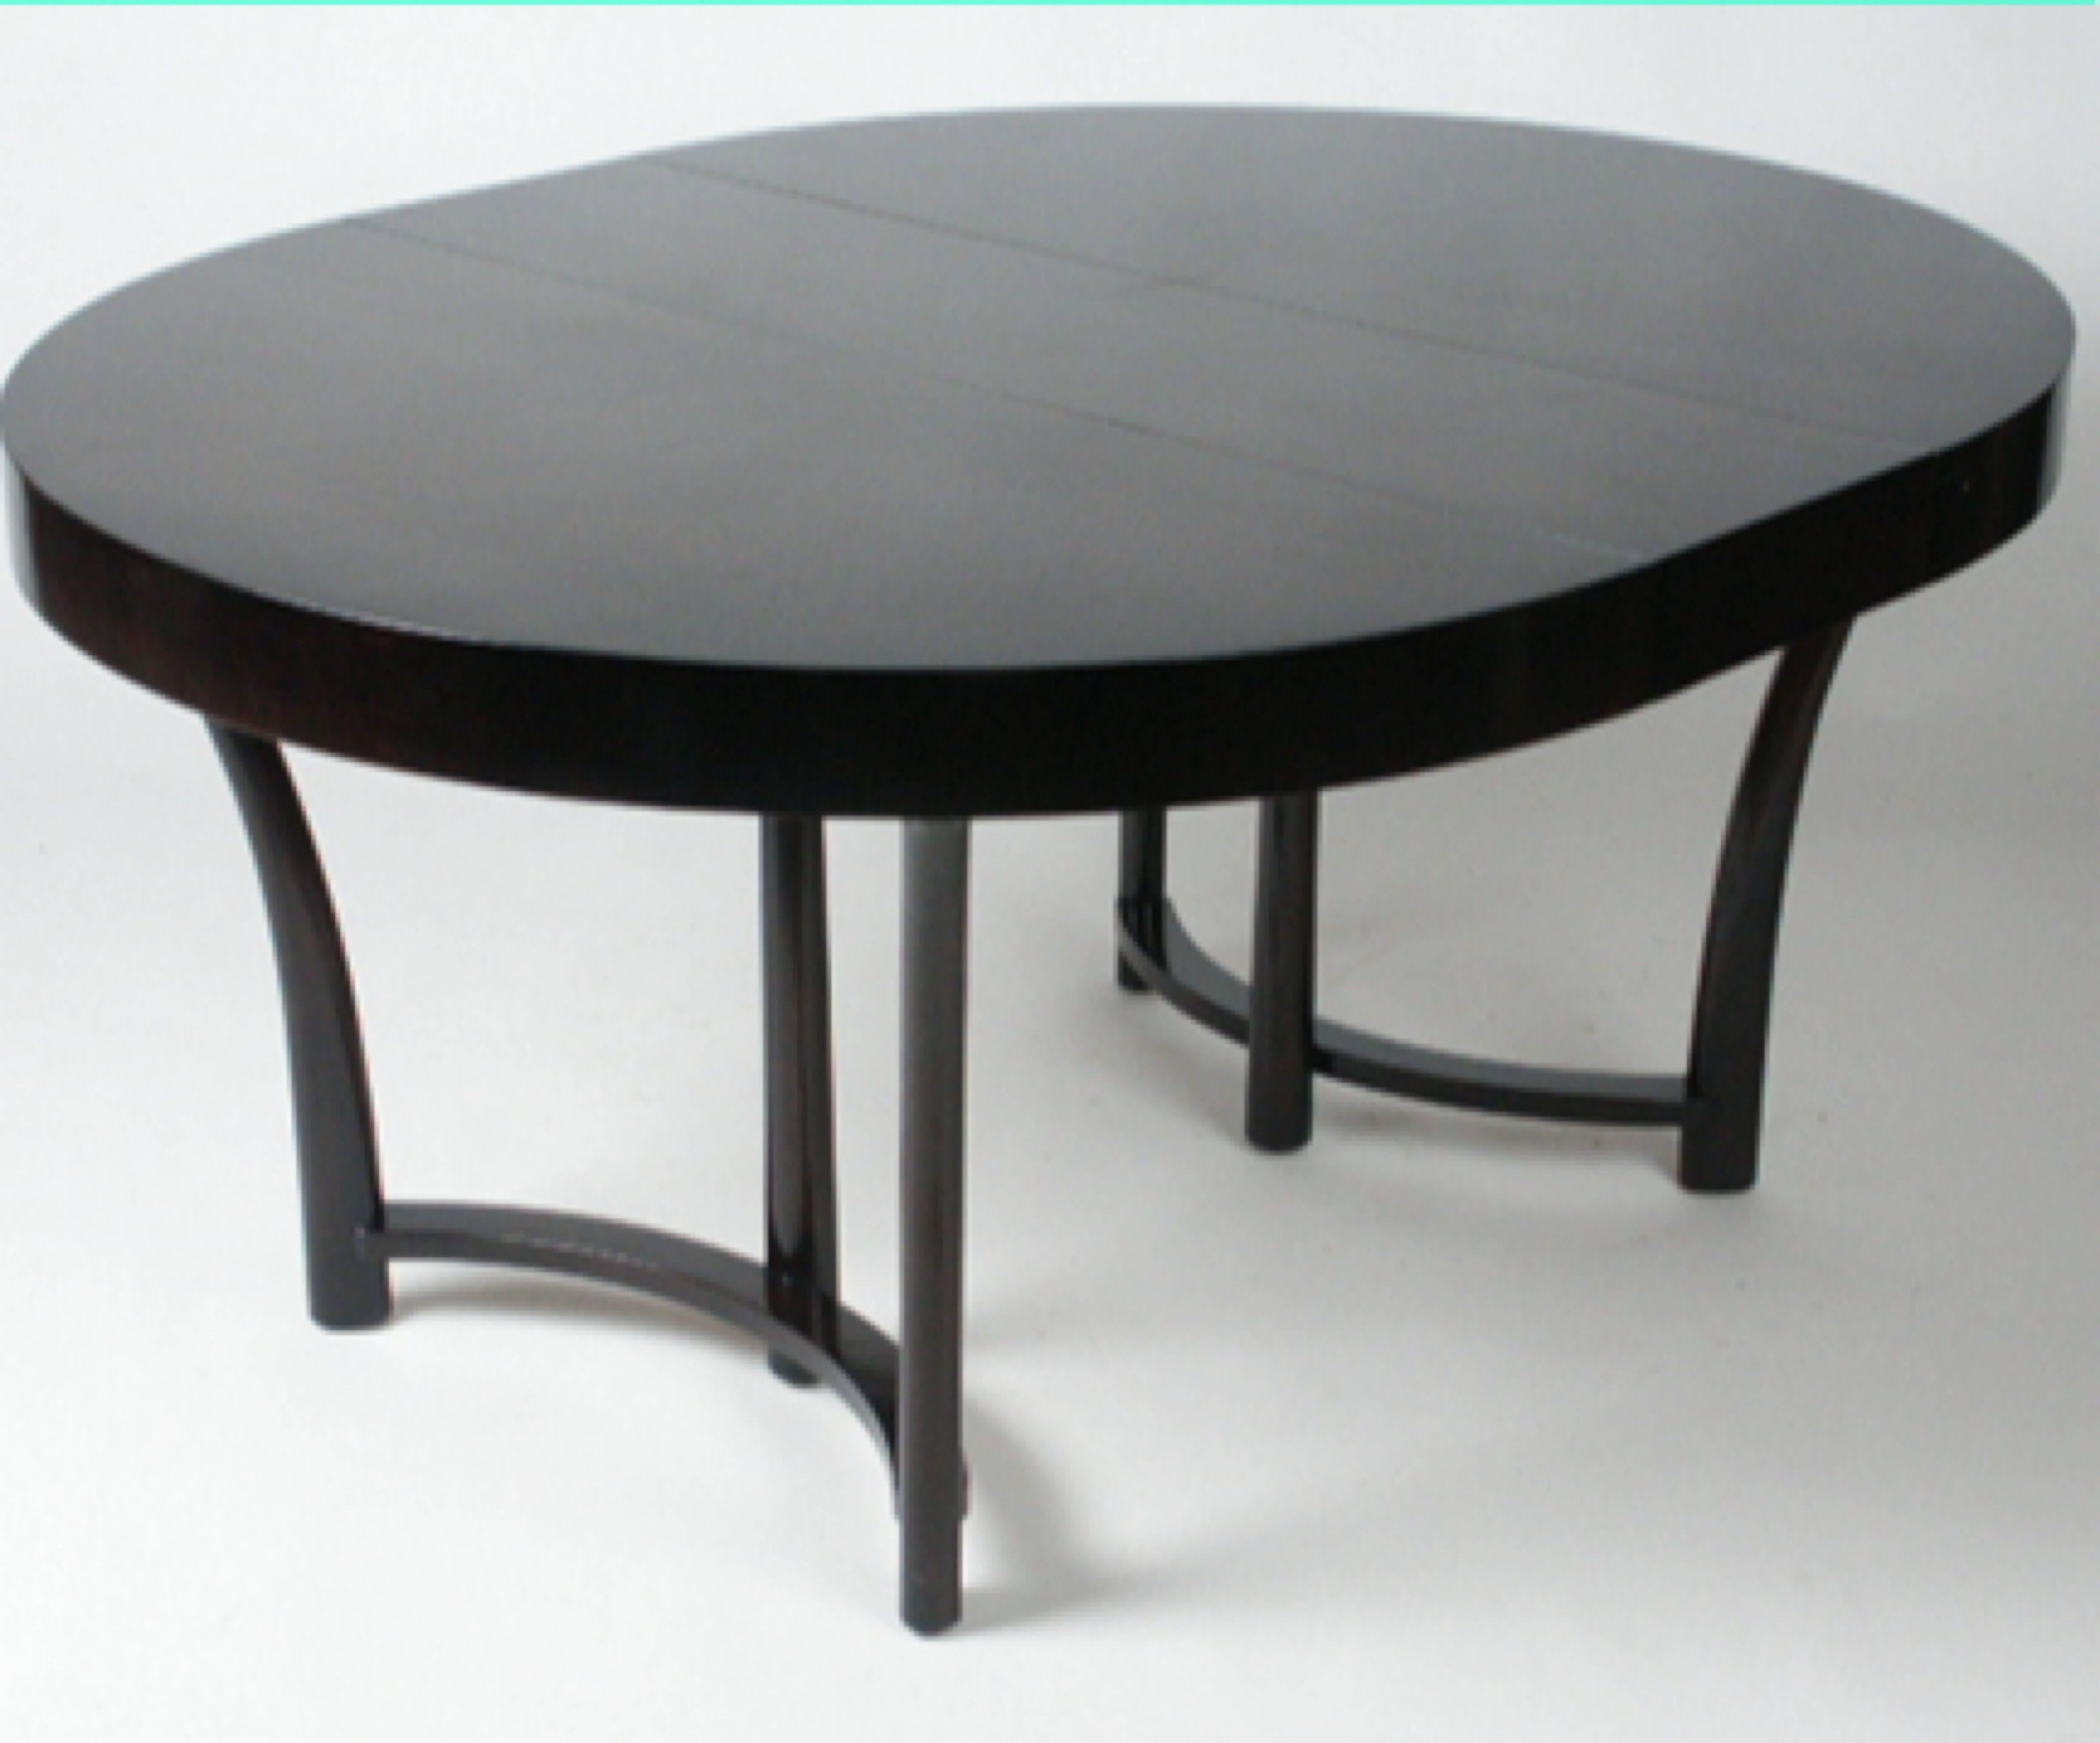 Mid-Century Modern Widdicomb Dining Table in the style of T. H. Robsjohn-Gibbings